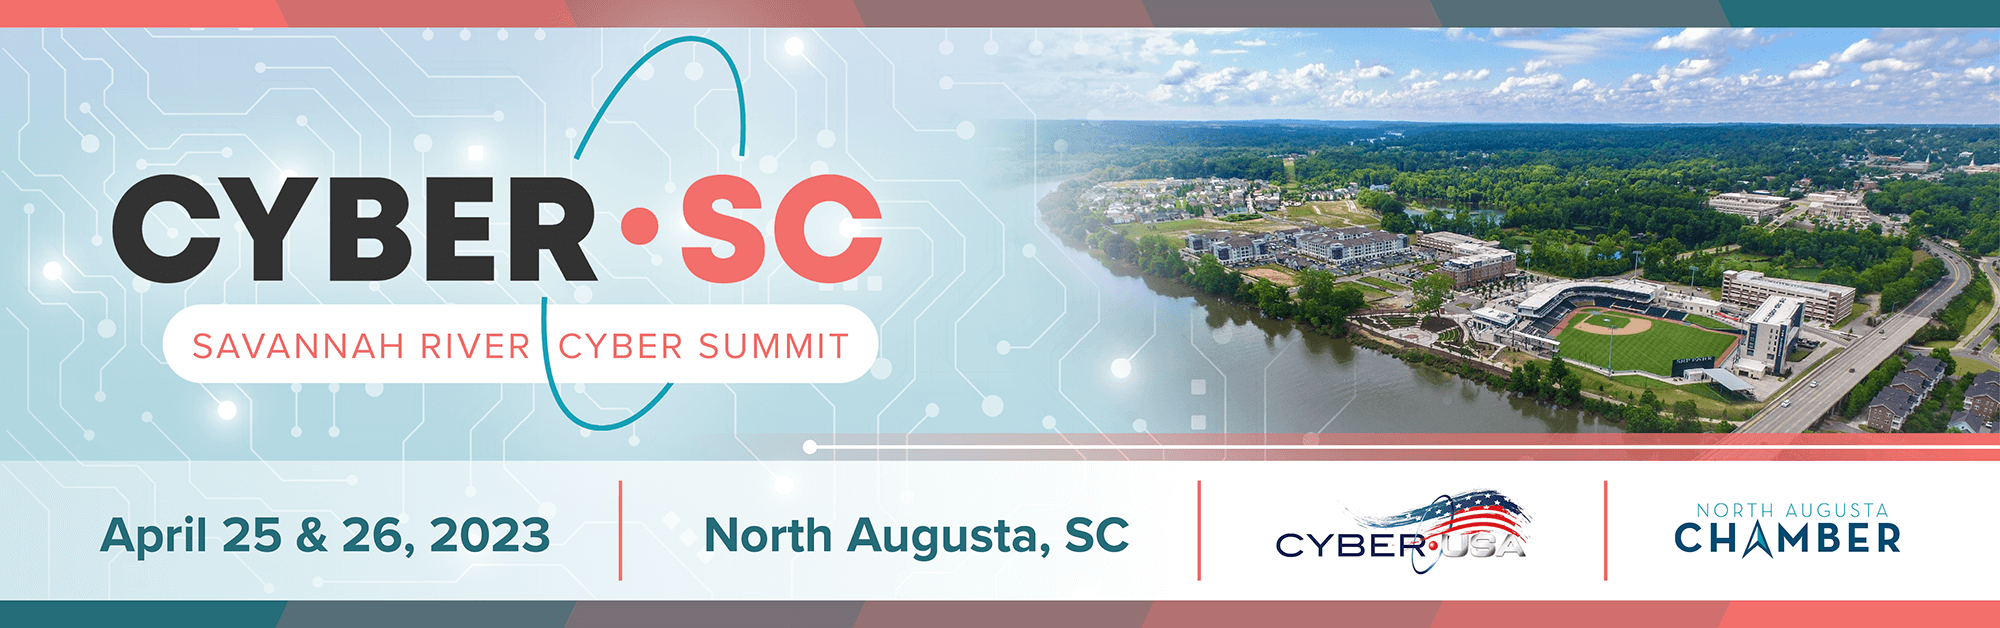 Cyber South Carolina/Savannah River Summit